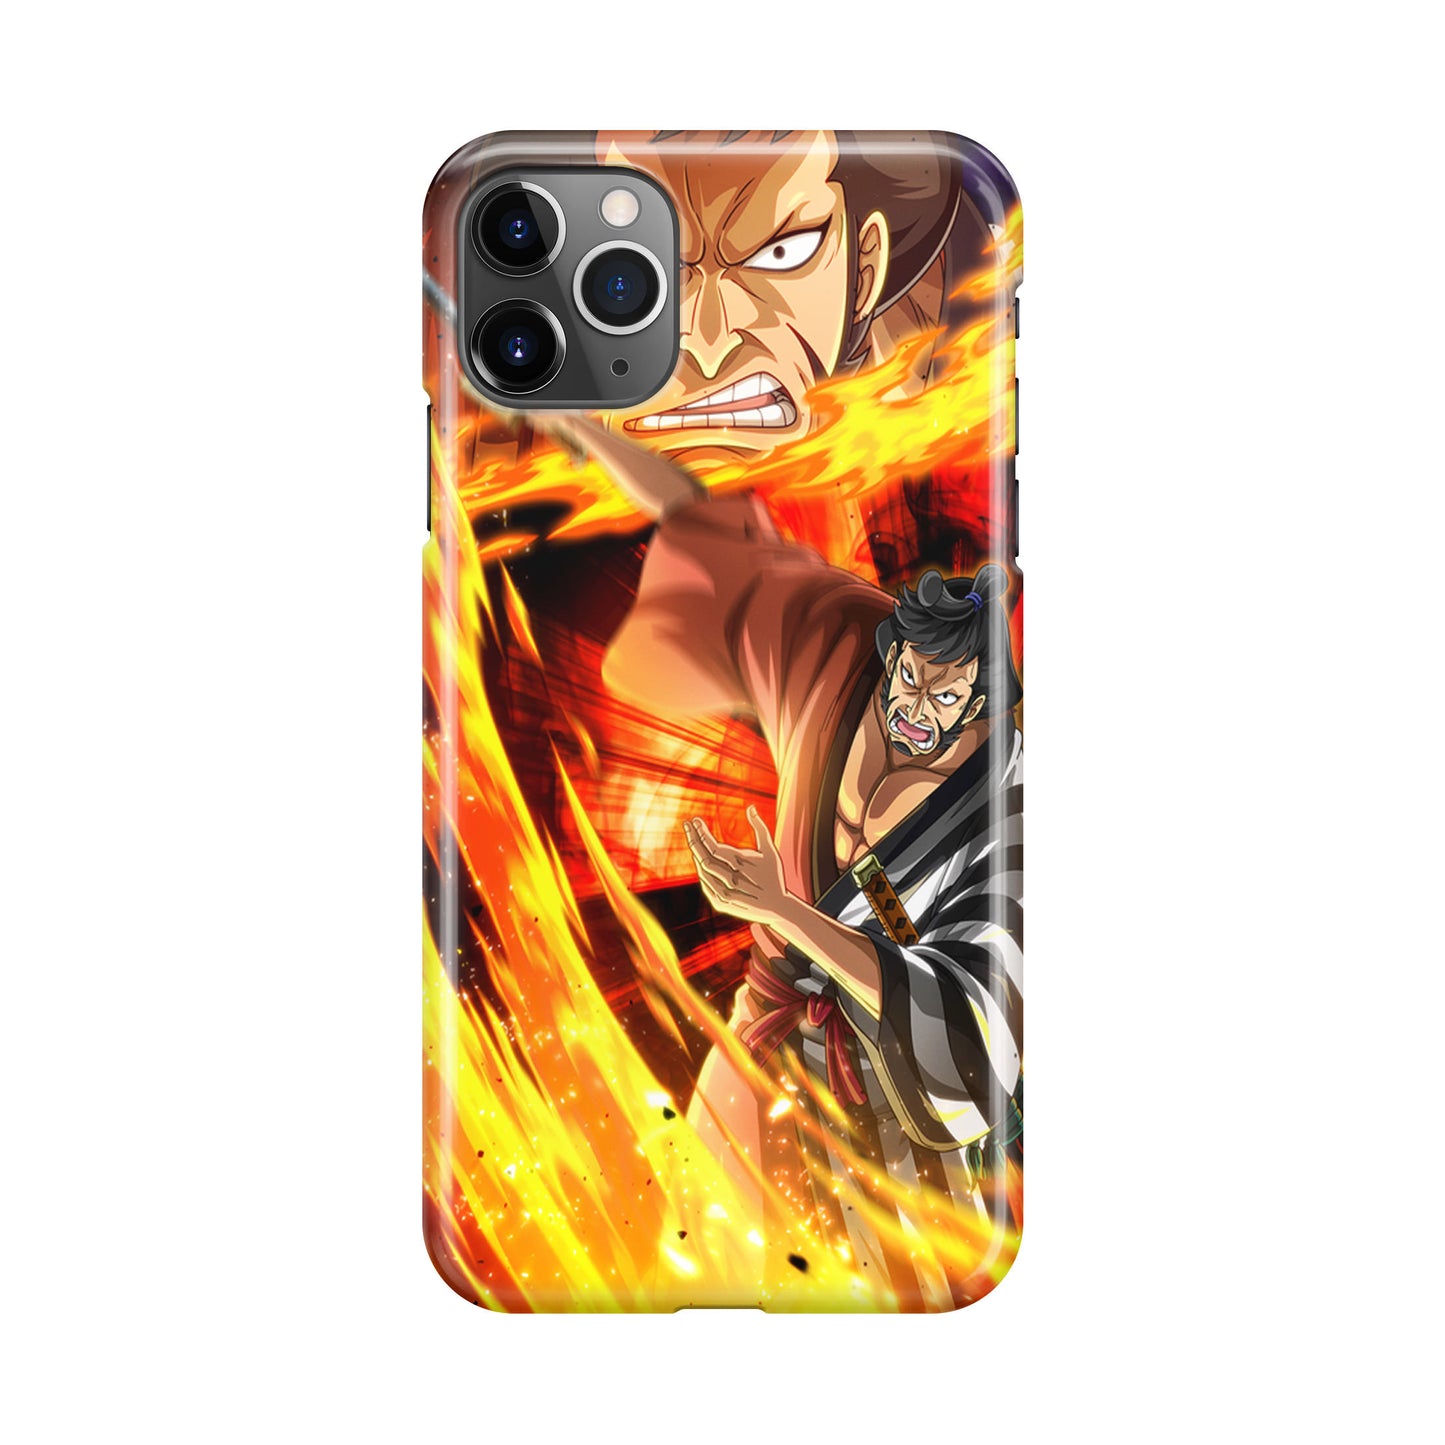 Foxfire Kinemo iPhone 11 Pro Case